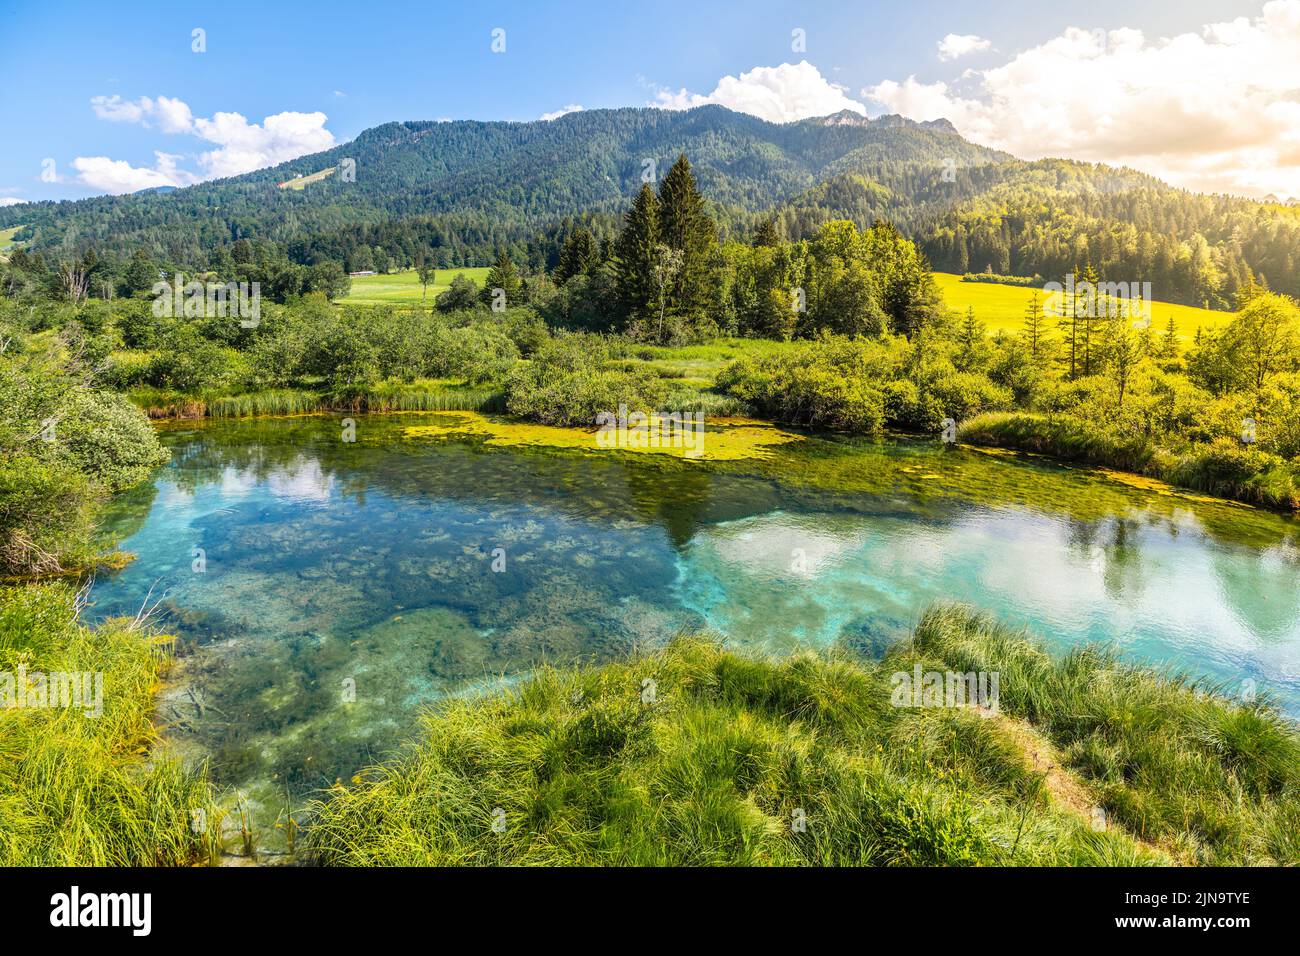 Zelenci - emerald-green lake in the mountains Stock Photo